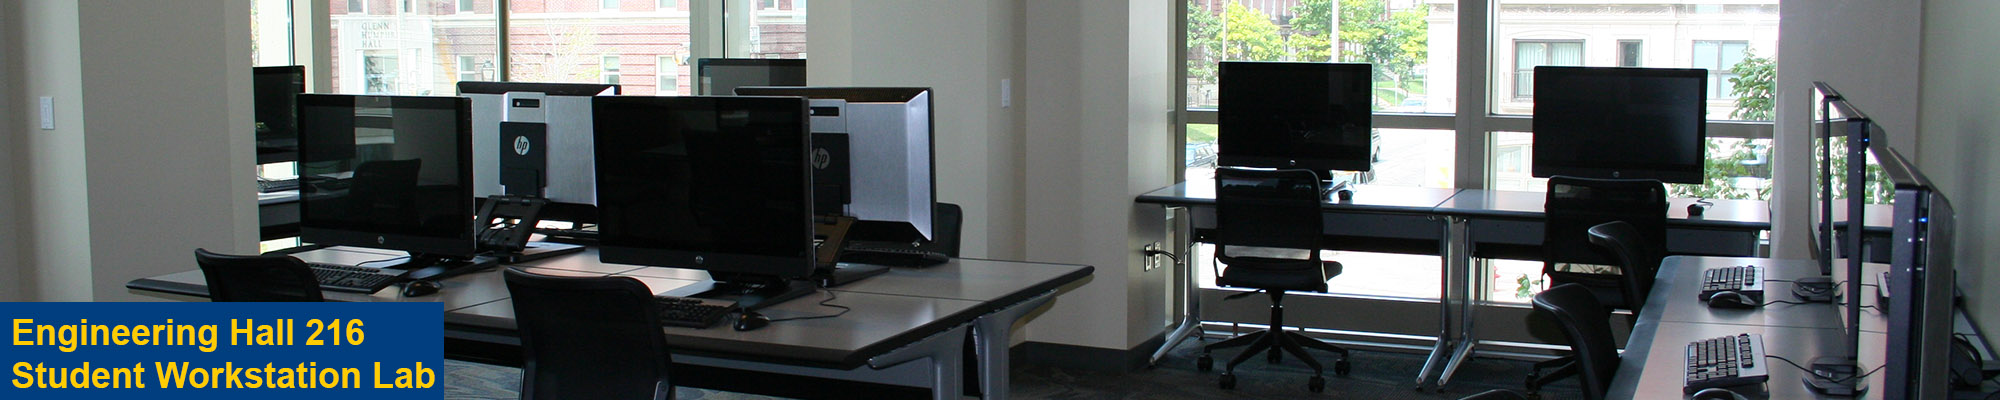 Engineering Hall Computer Lab